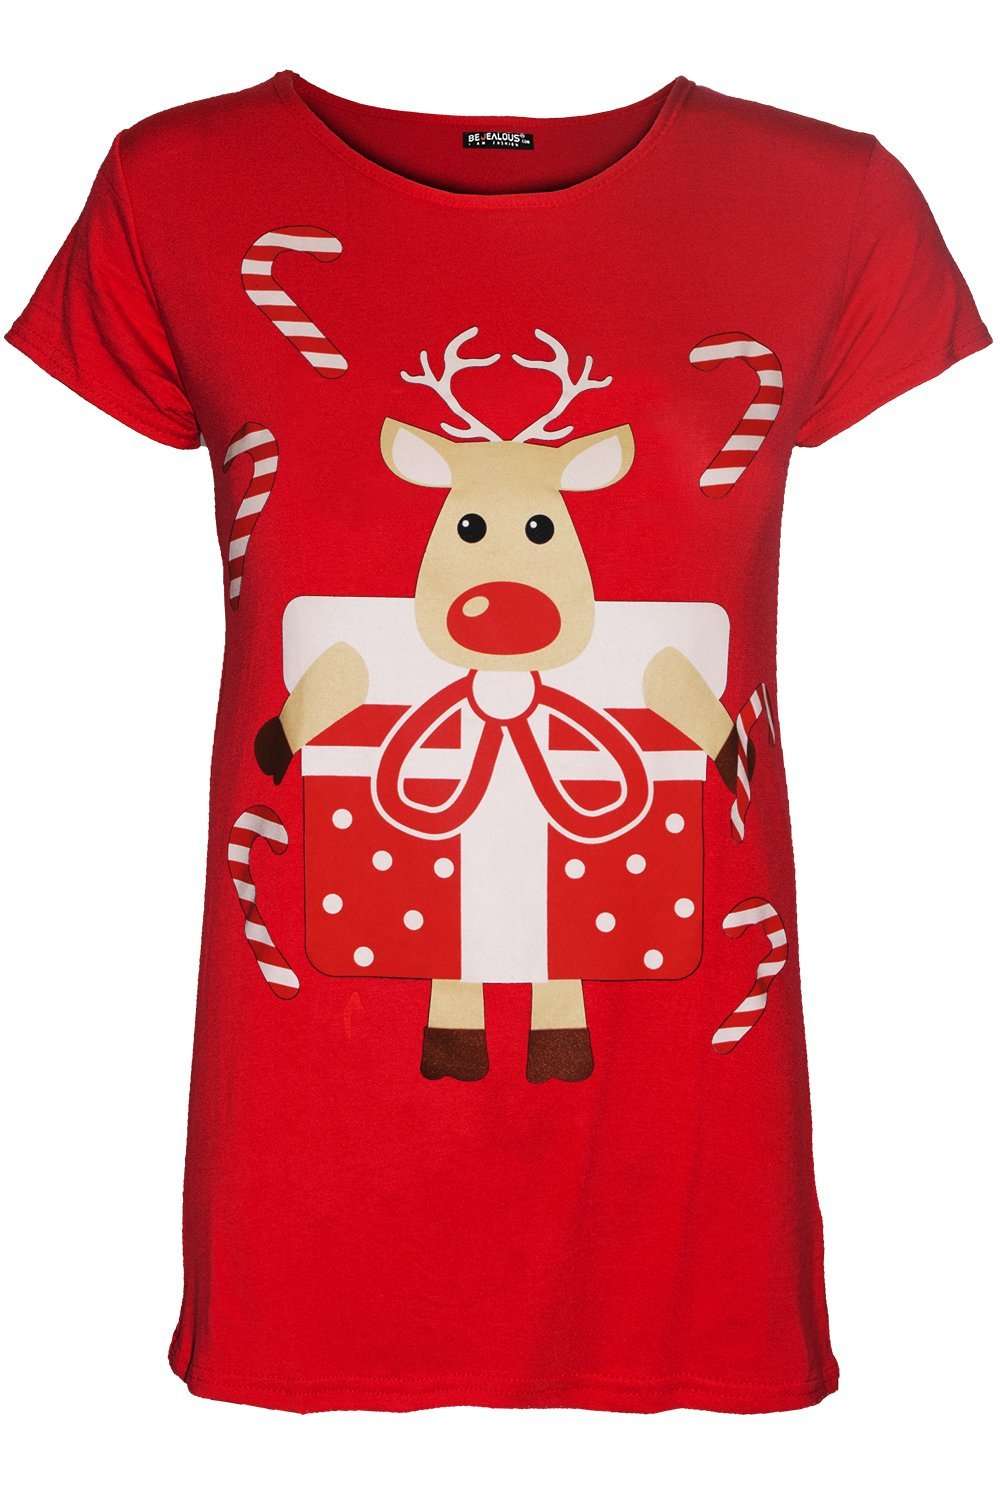 Christmas Reindeer Graphic Tshirt - bejealous-com